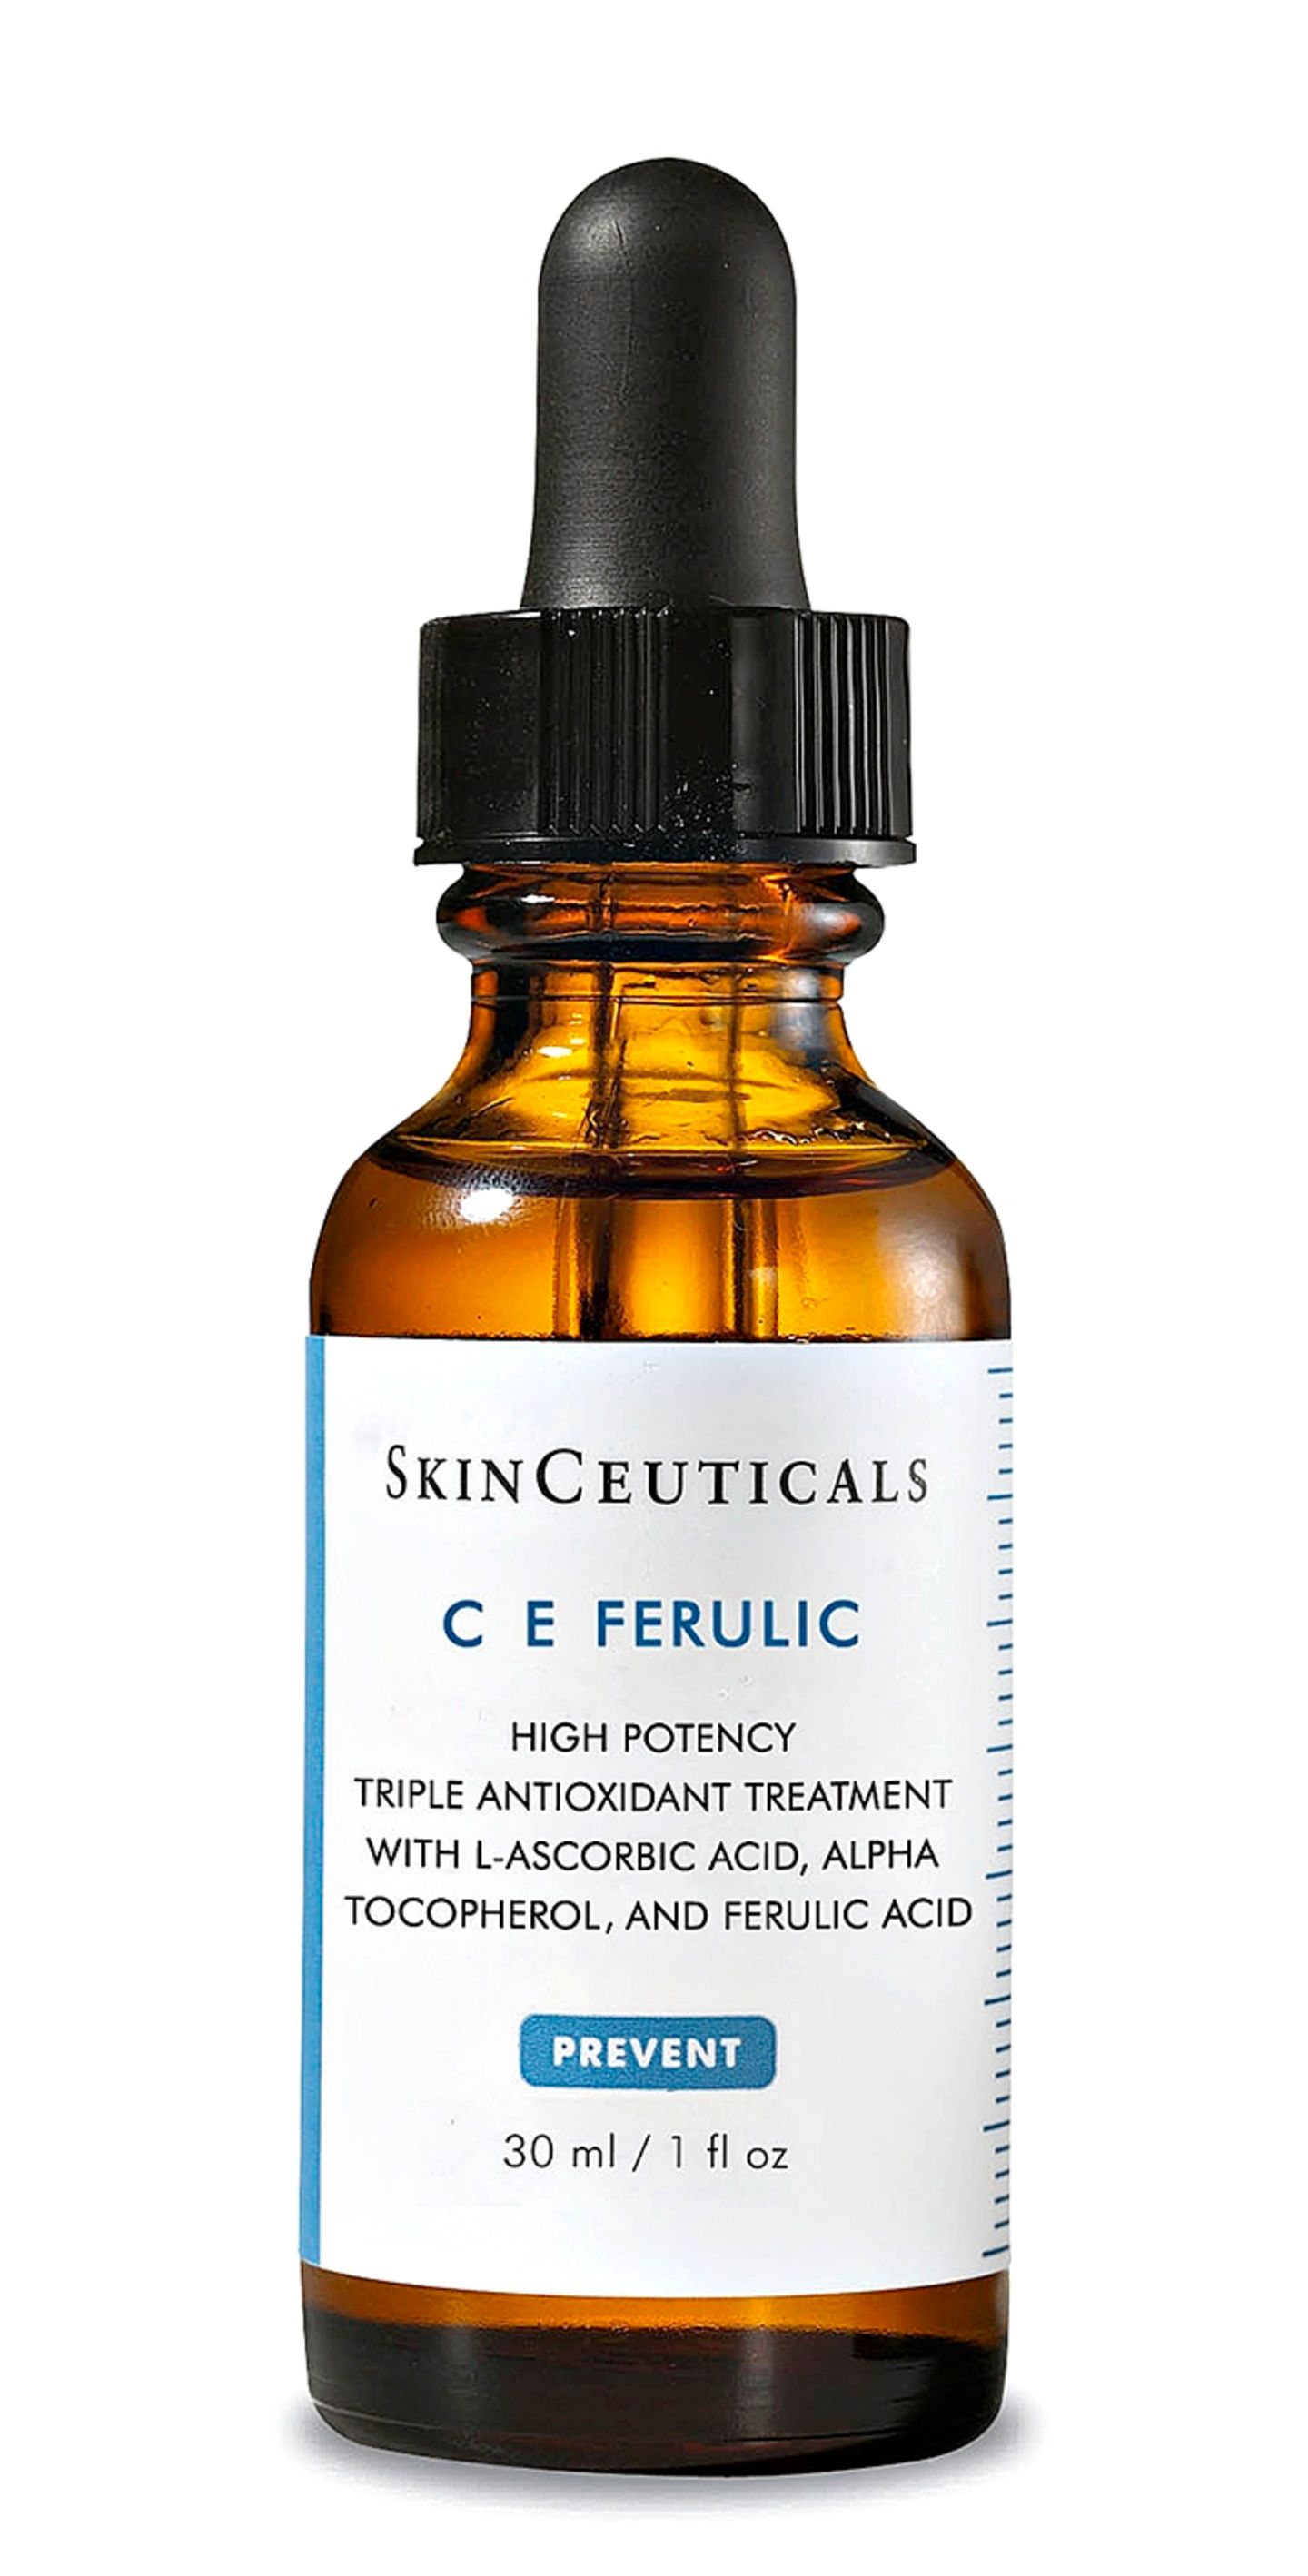 "C E Ferulic" von Skinceuticals, 30 ml ca. 159 Euro.